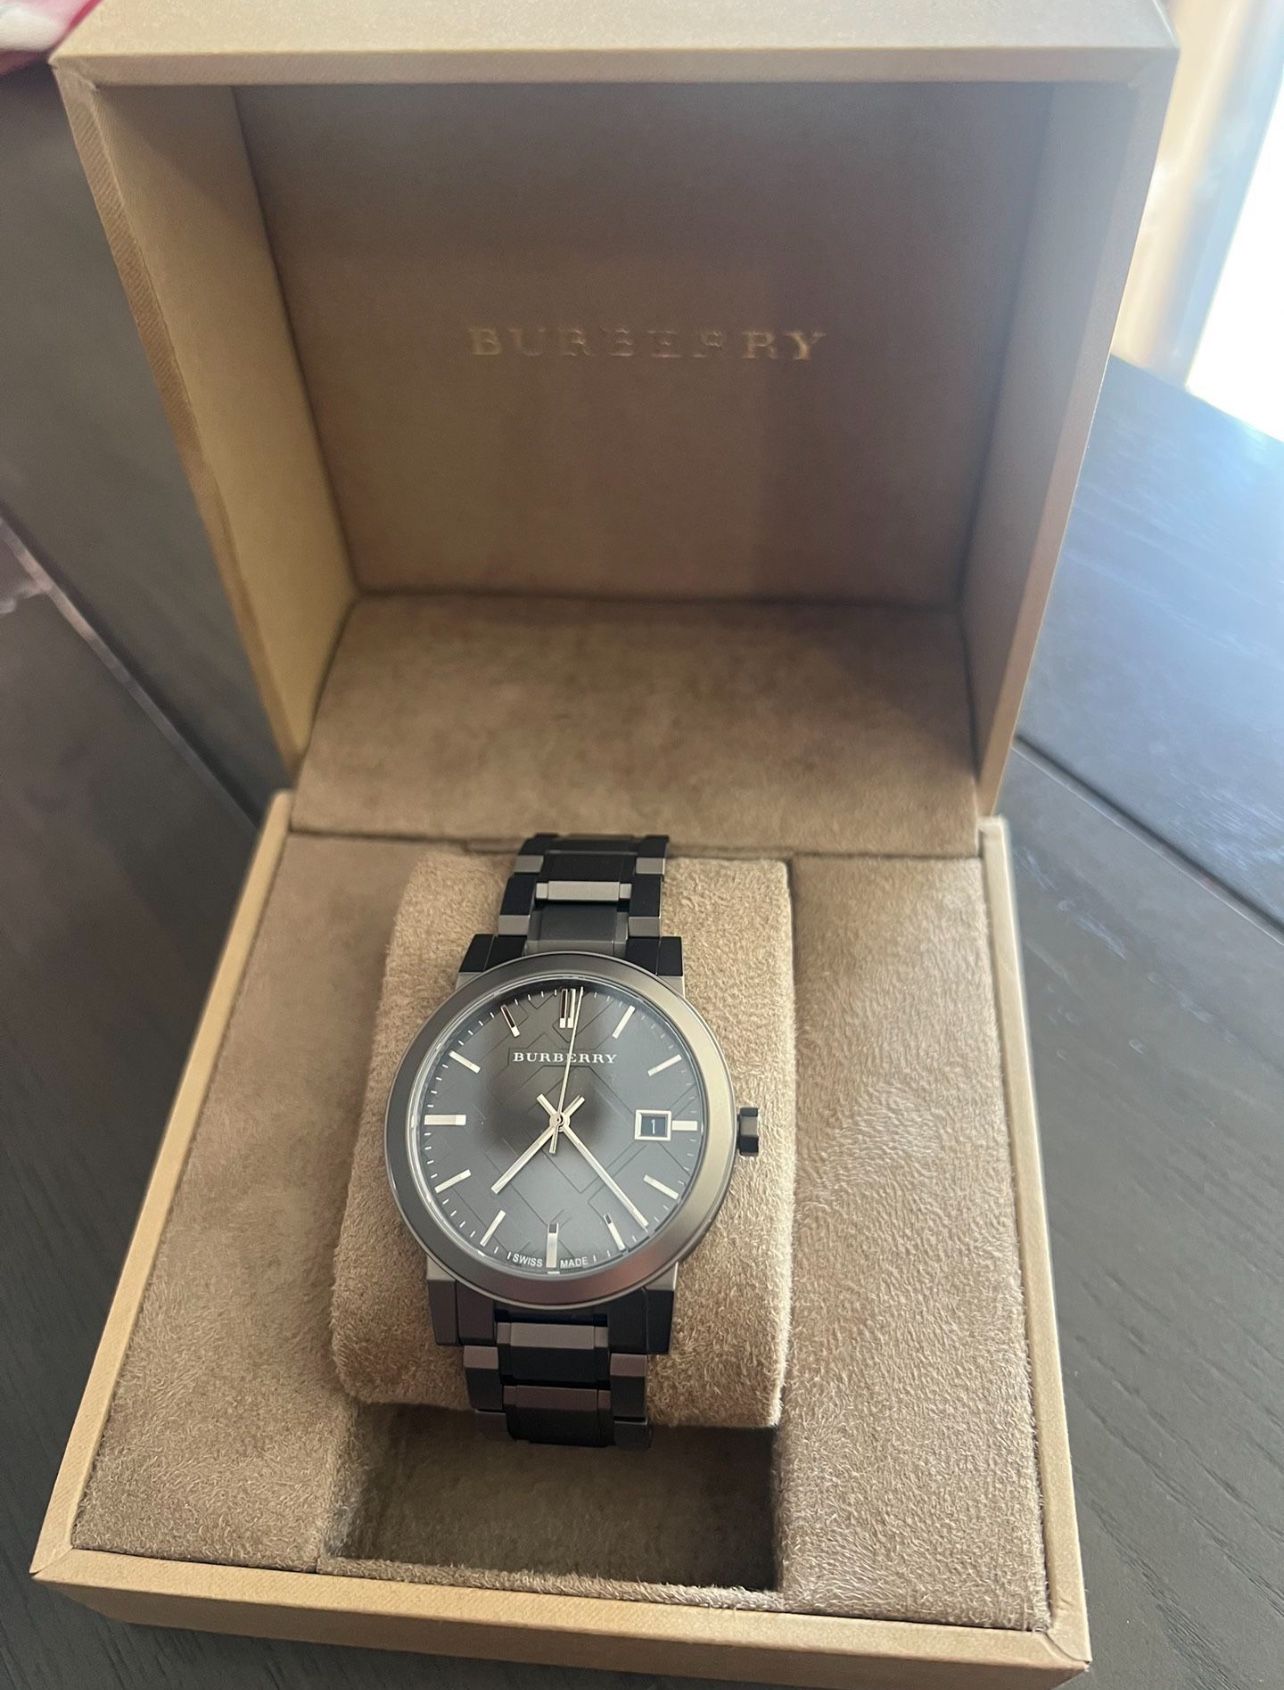 Burberry Watch